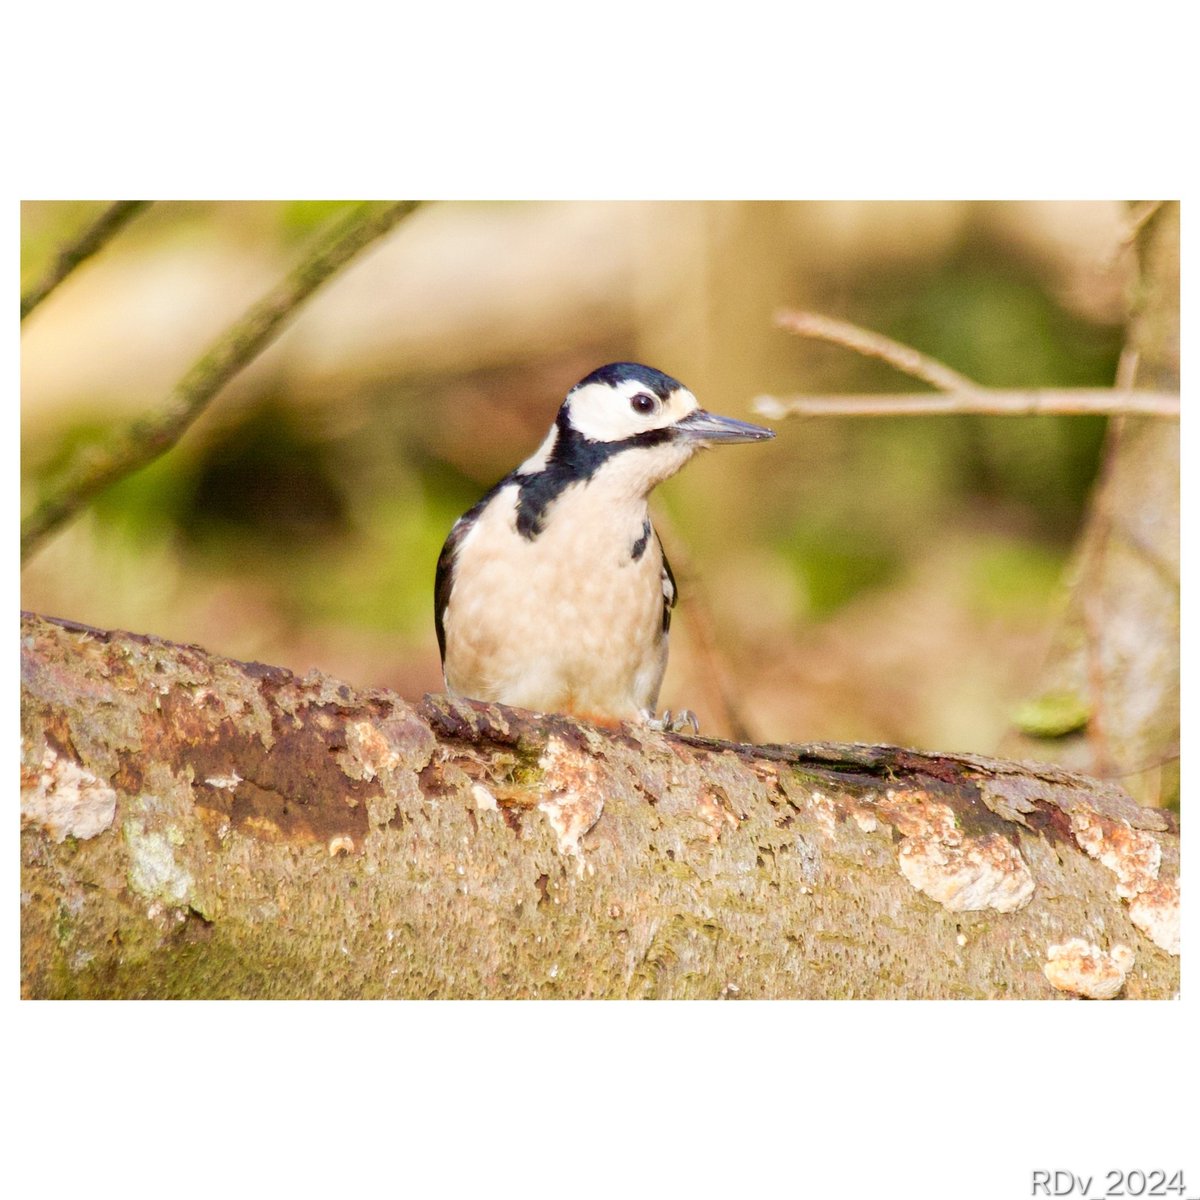 Woodpecker #woodpecker #birdlover #birdphotography #birding #birdwatching #birdsup #BirdsSeenIn2024 @ThePhotoHour